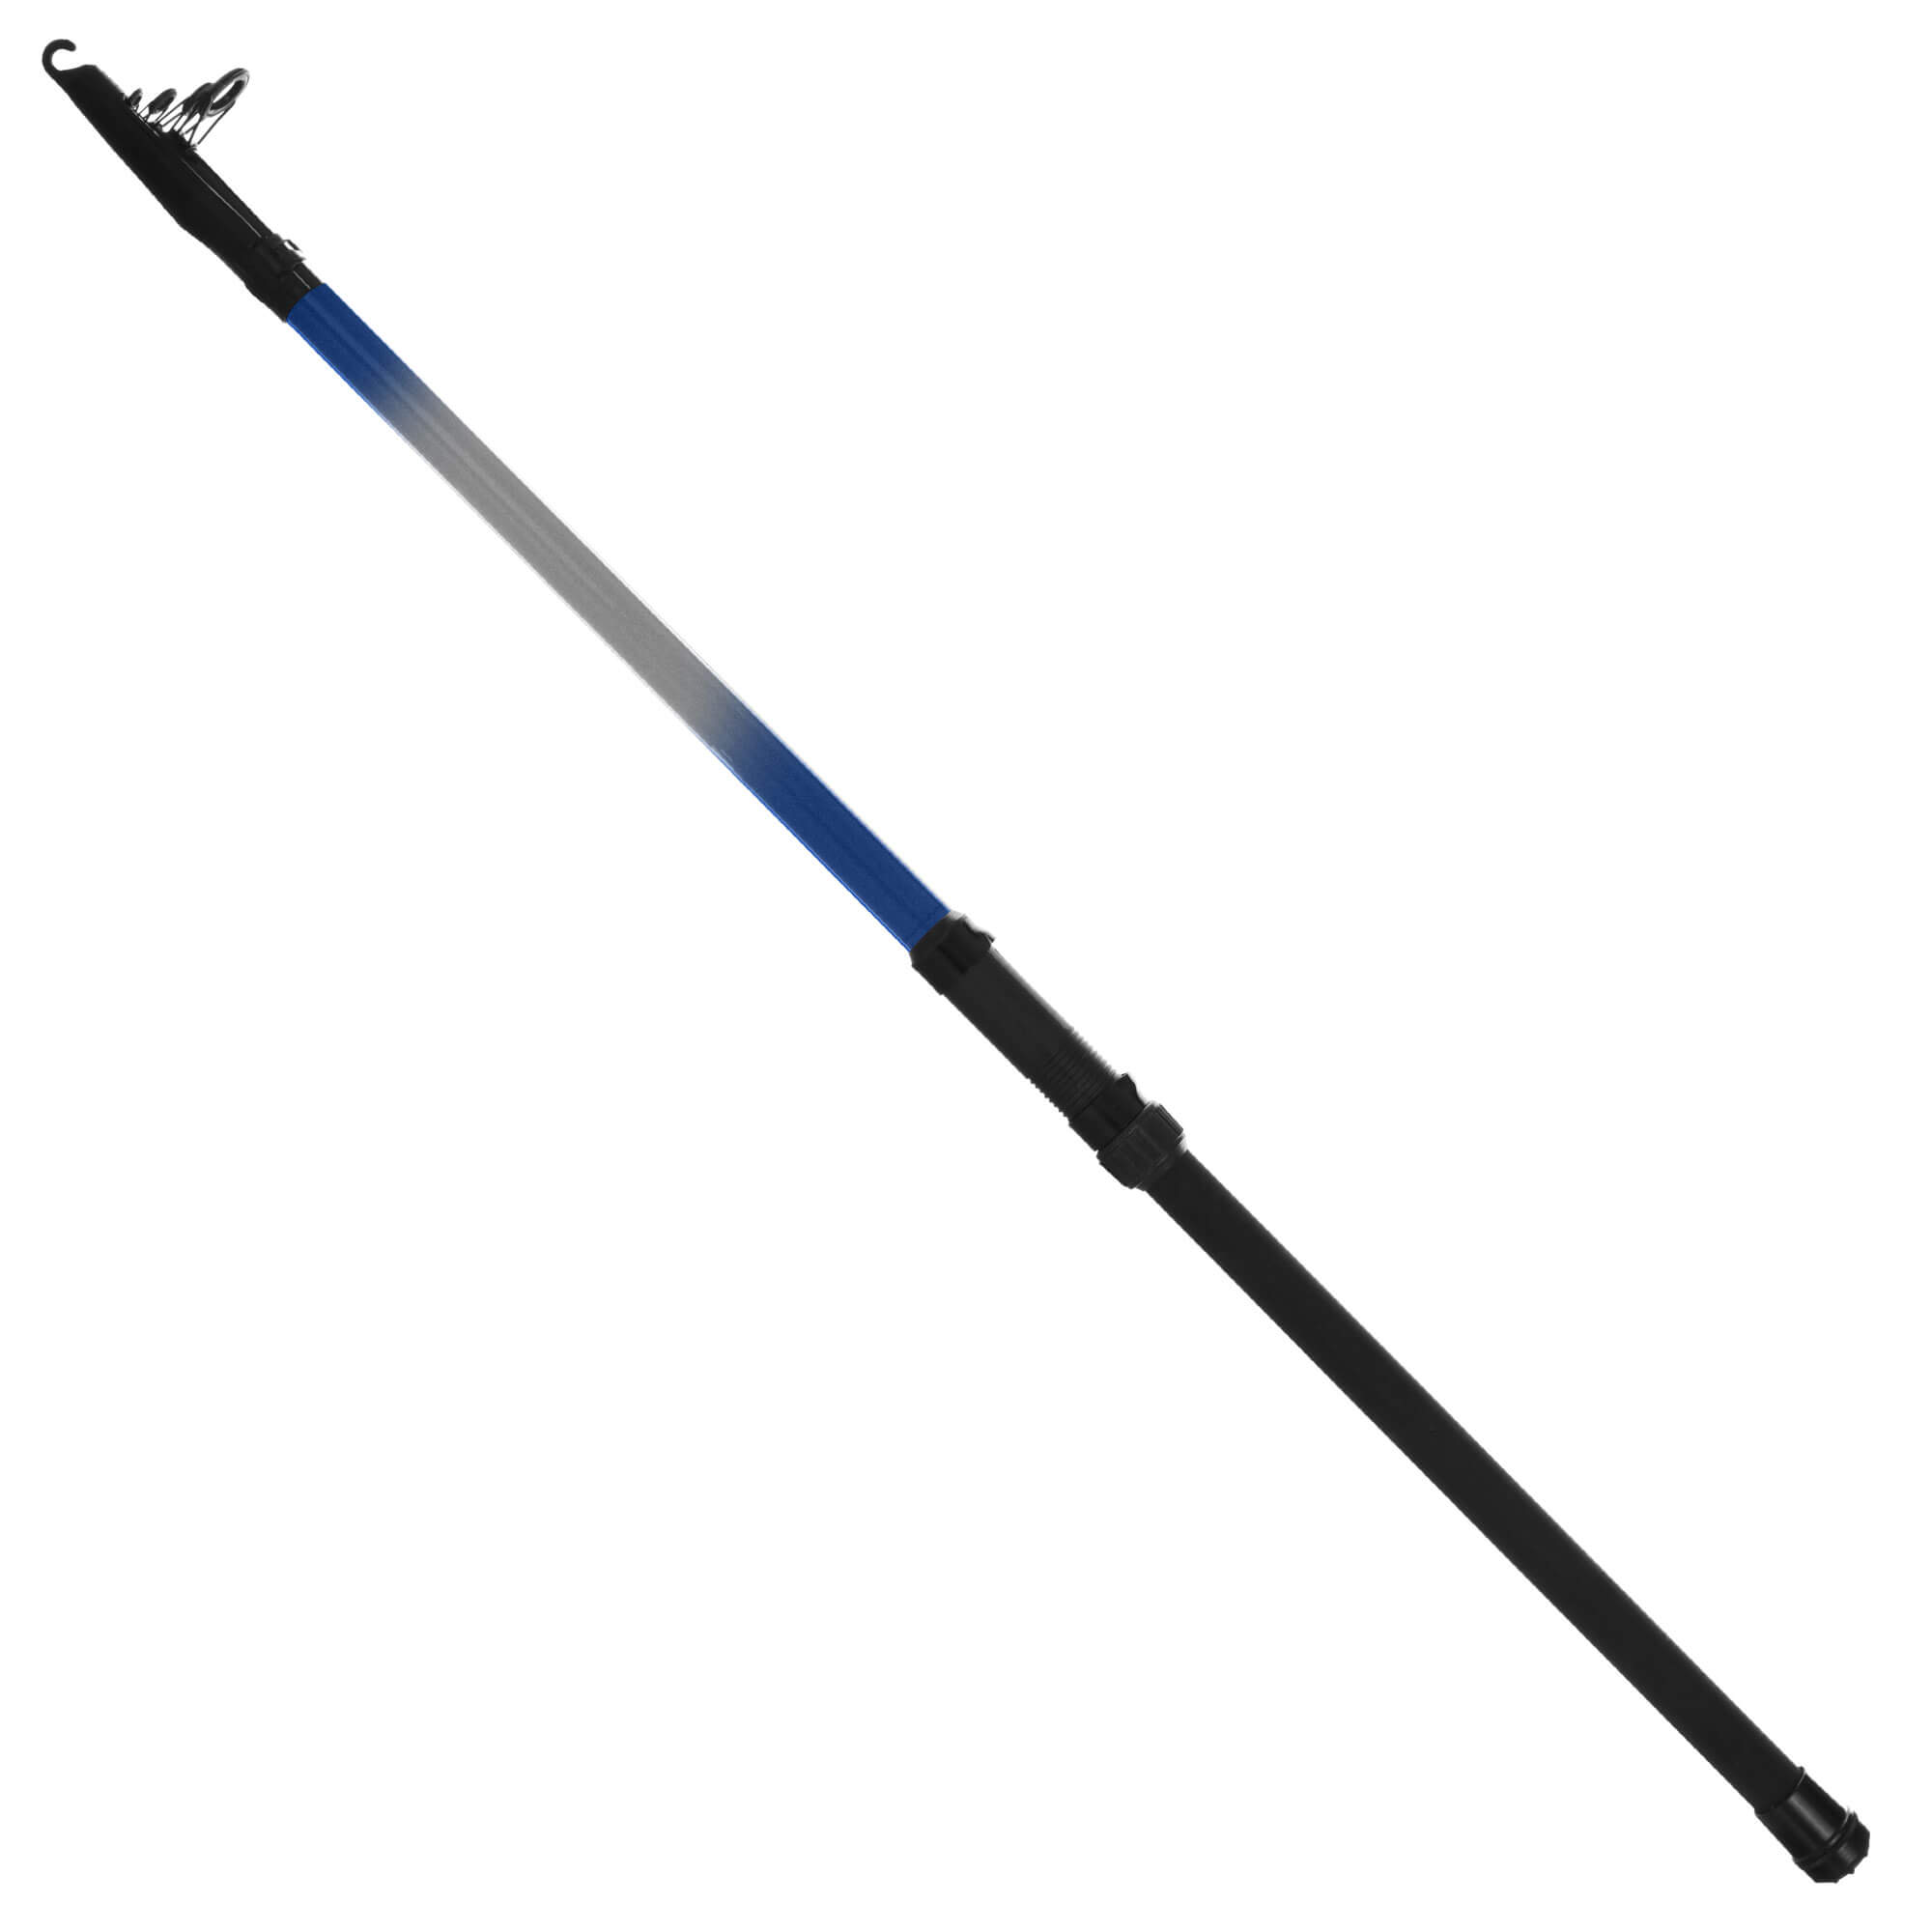 Gone Fishing Telescoping Fishing Rod up to 9.5 feet - Blue - JL Ryan